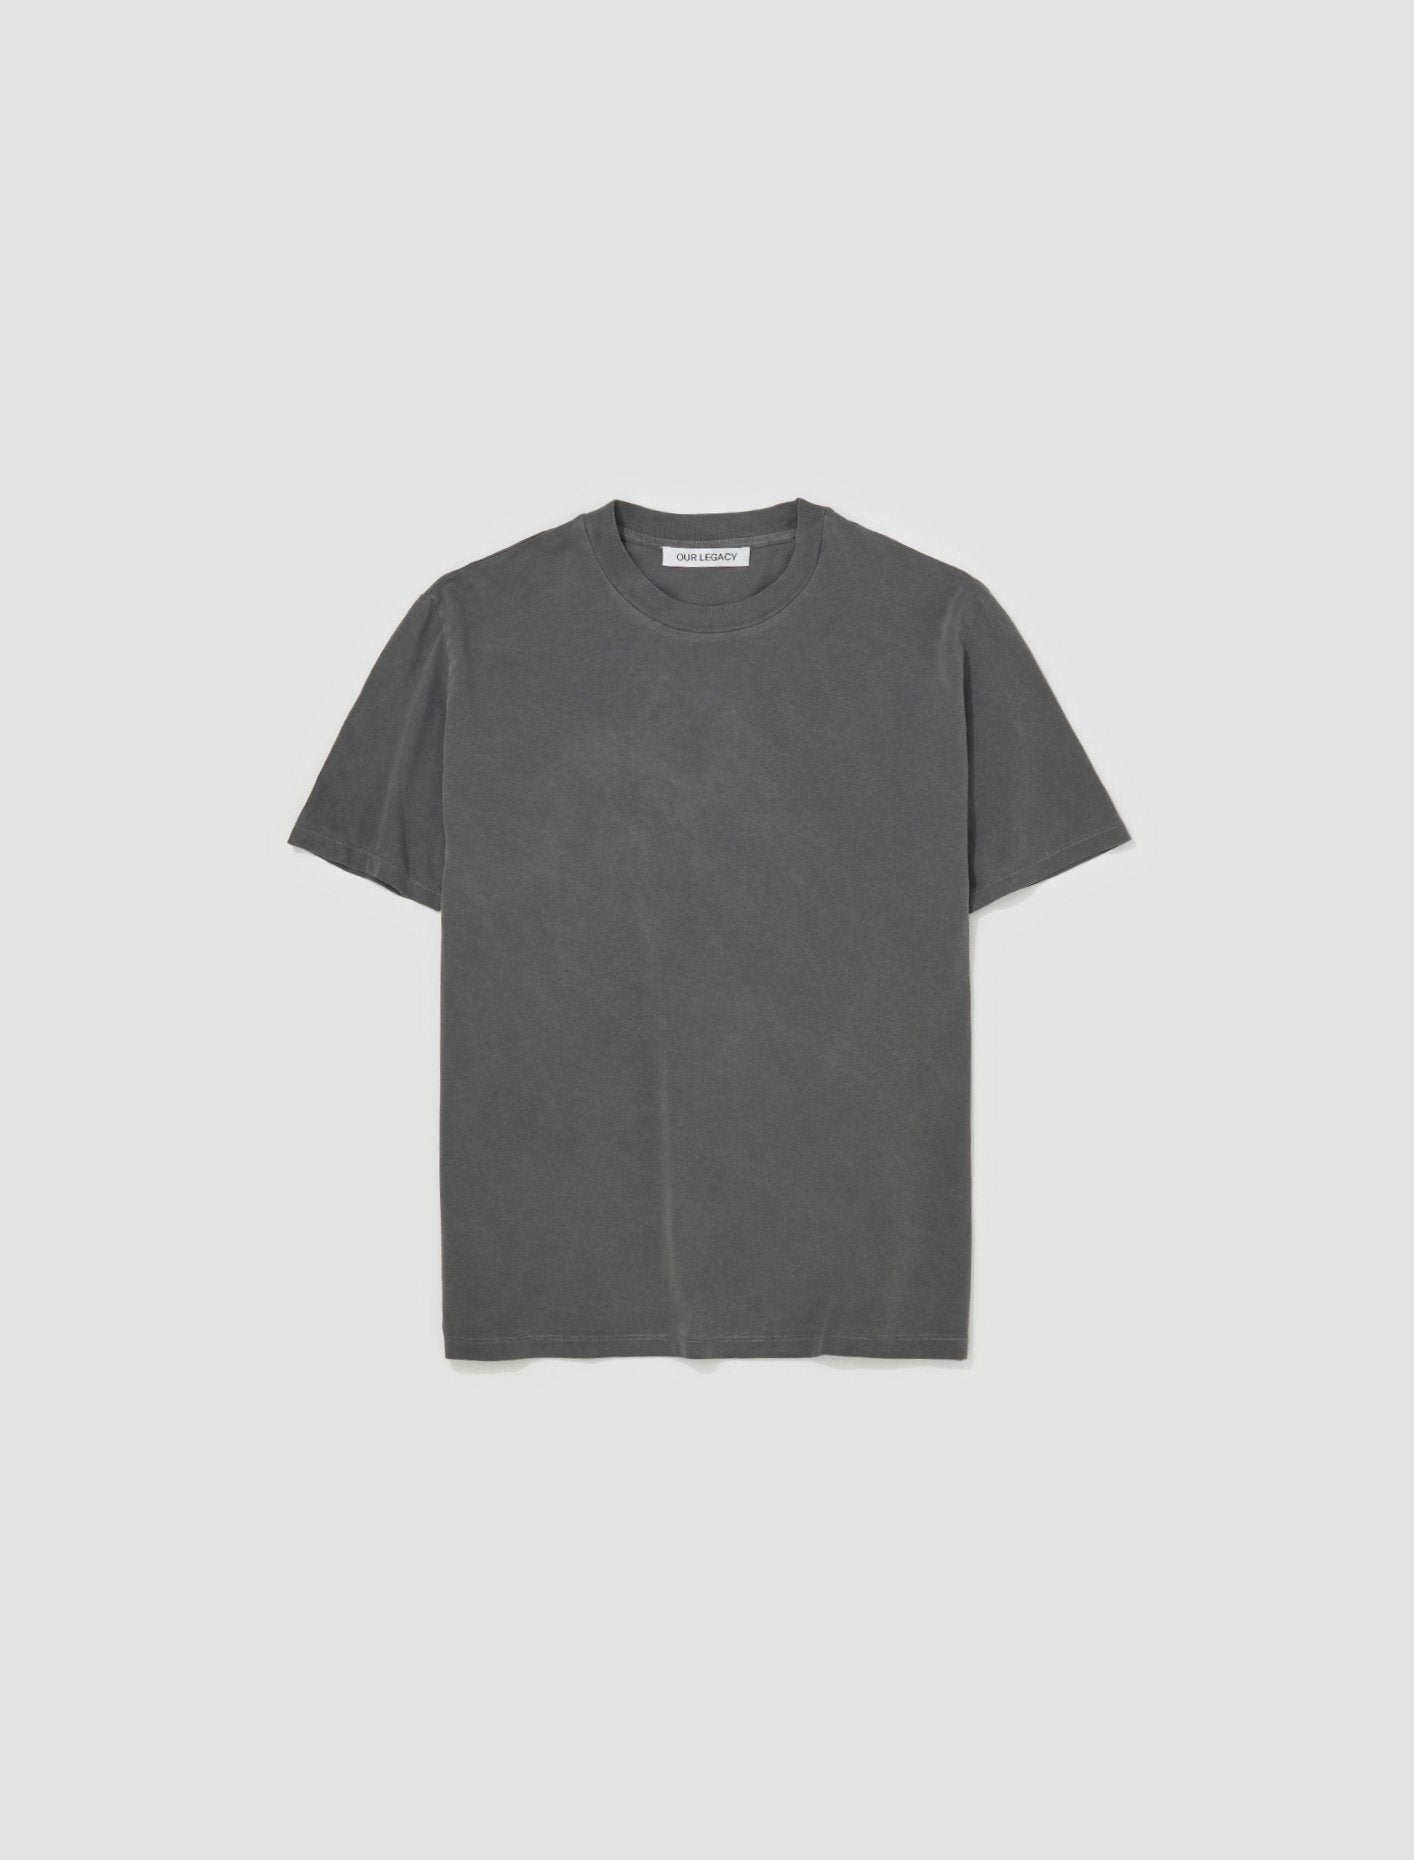 Box T-Shirt in Worn Black